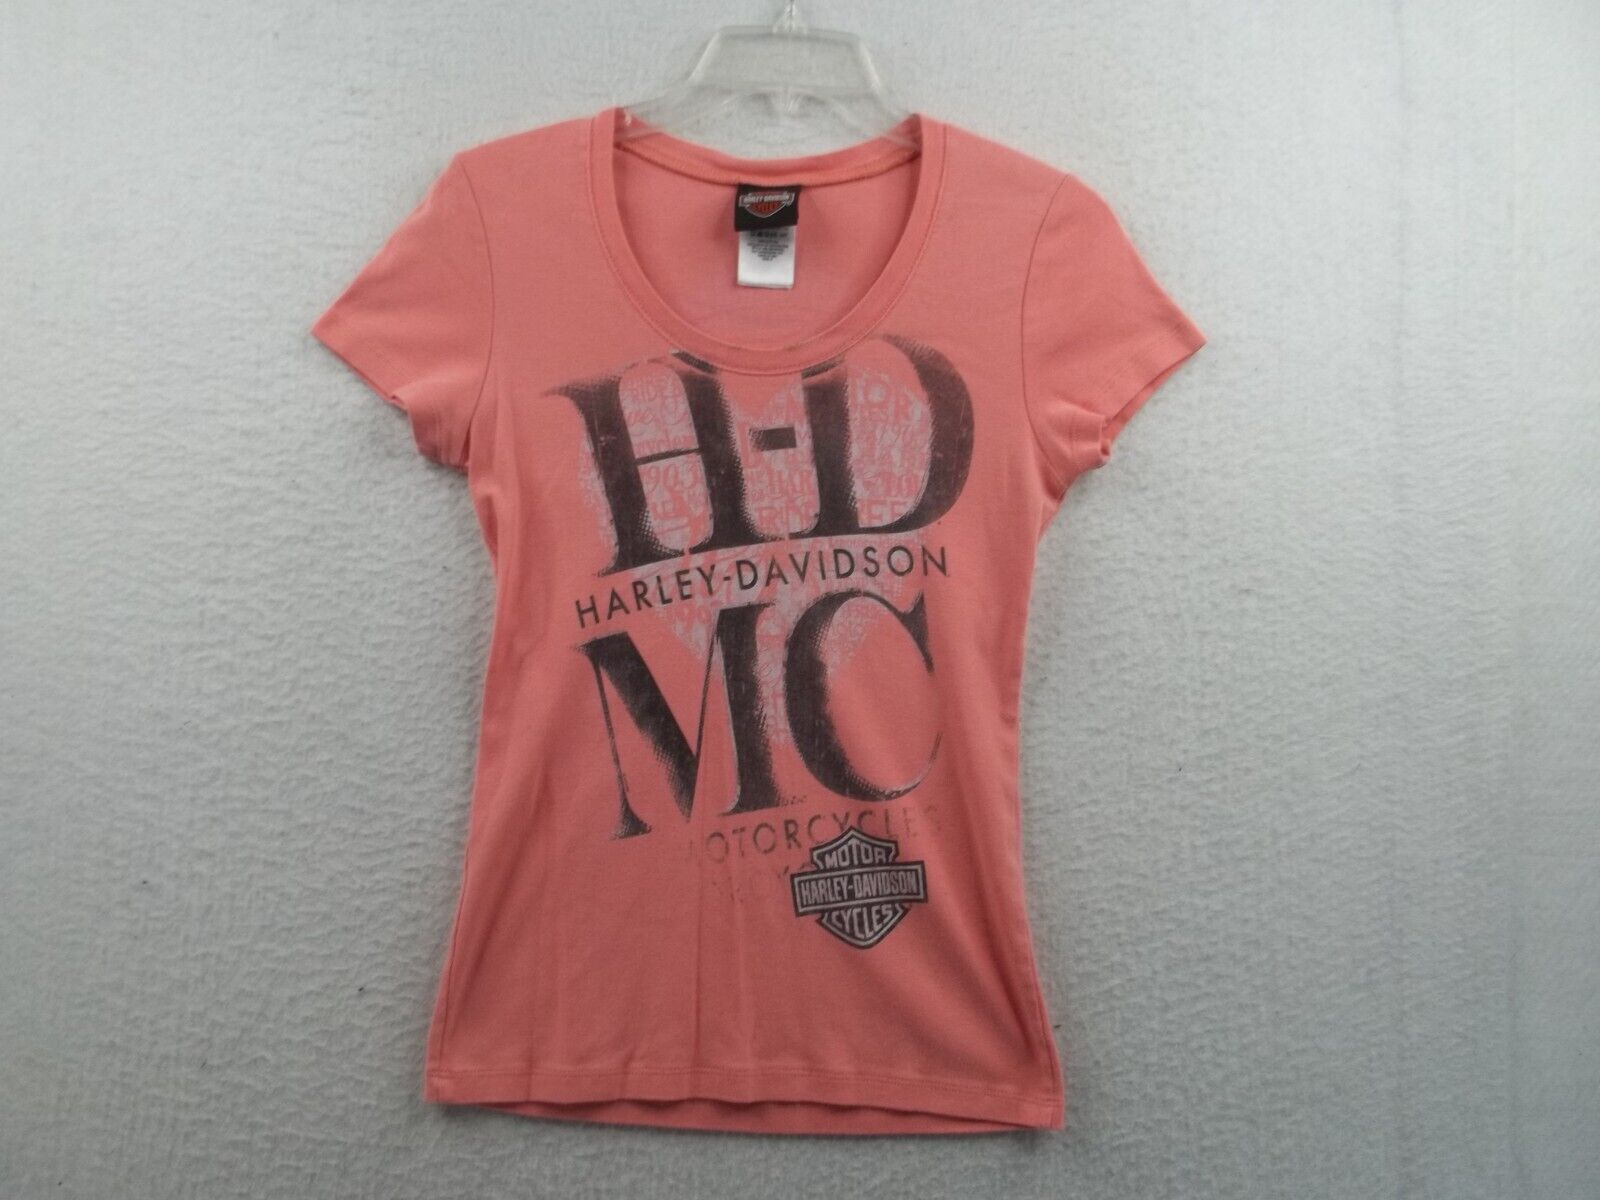 Harley Davidson MC Thunder Creek Chattanooga TN Womens Pink T Shirt Size S